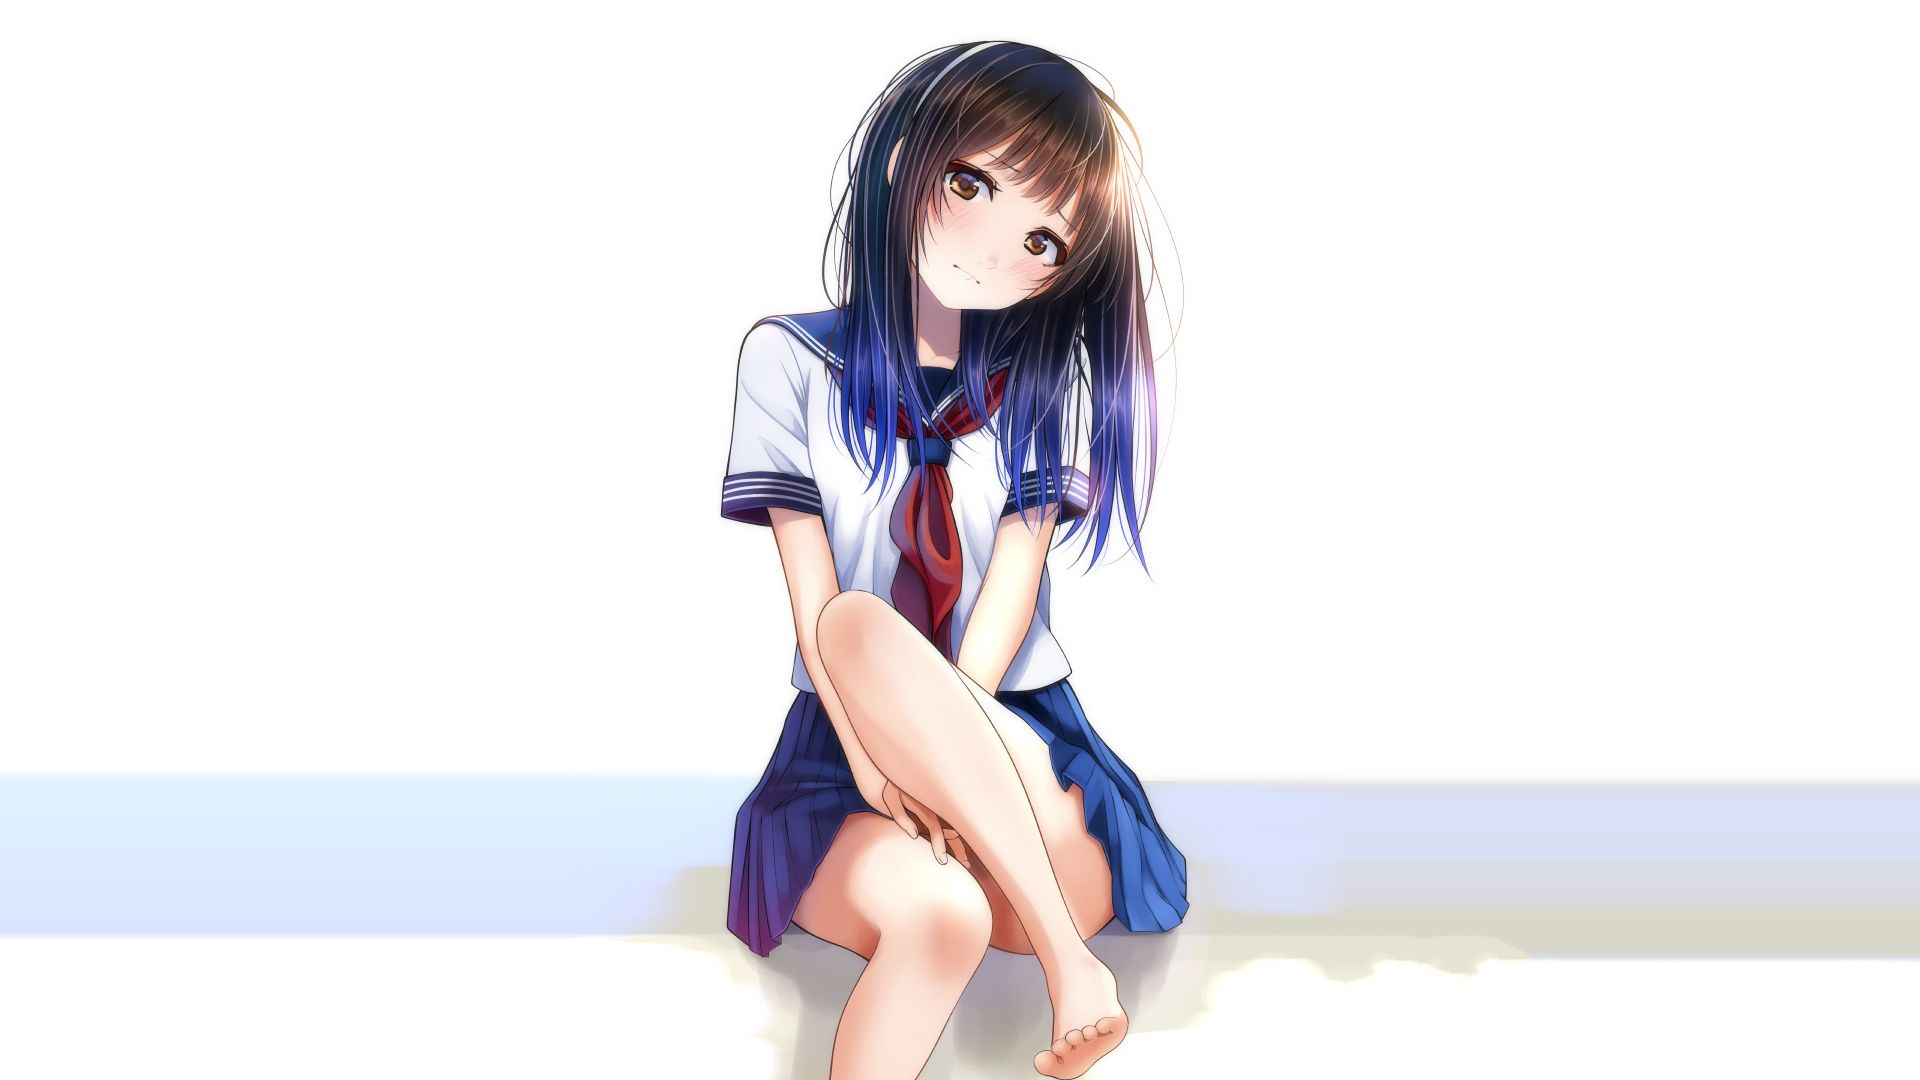 Desktop Wallpaper School Dress, Anime Girl, Sitting, Calm, Hd Image,  Picture, Background, E107a8